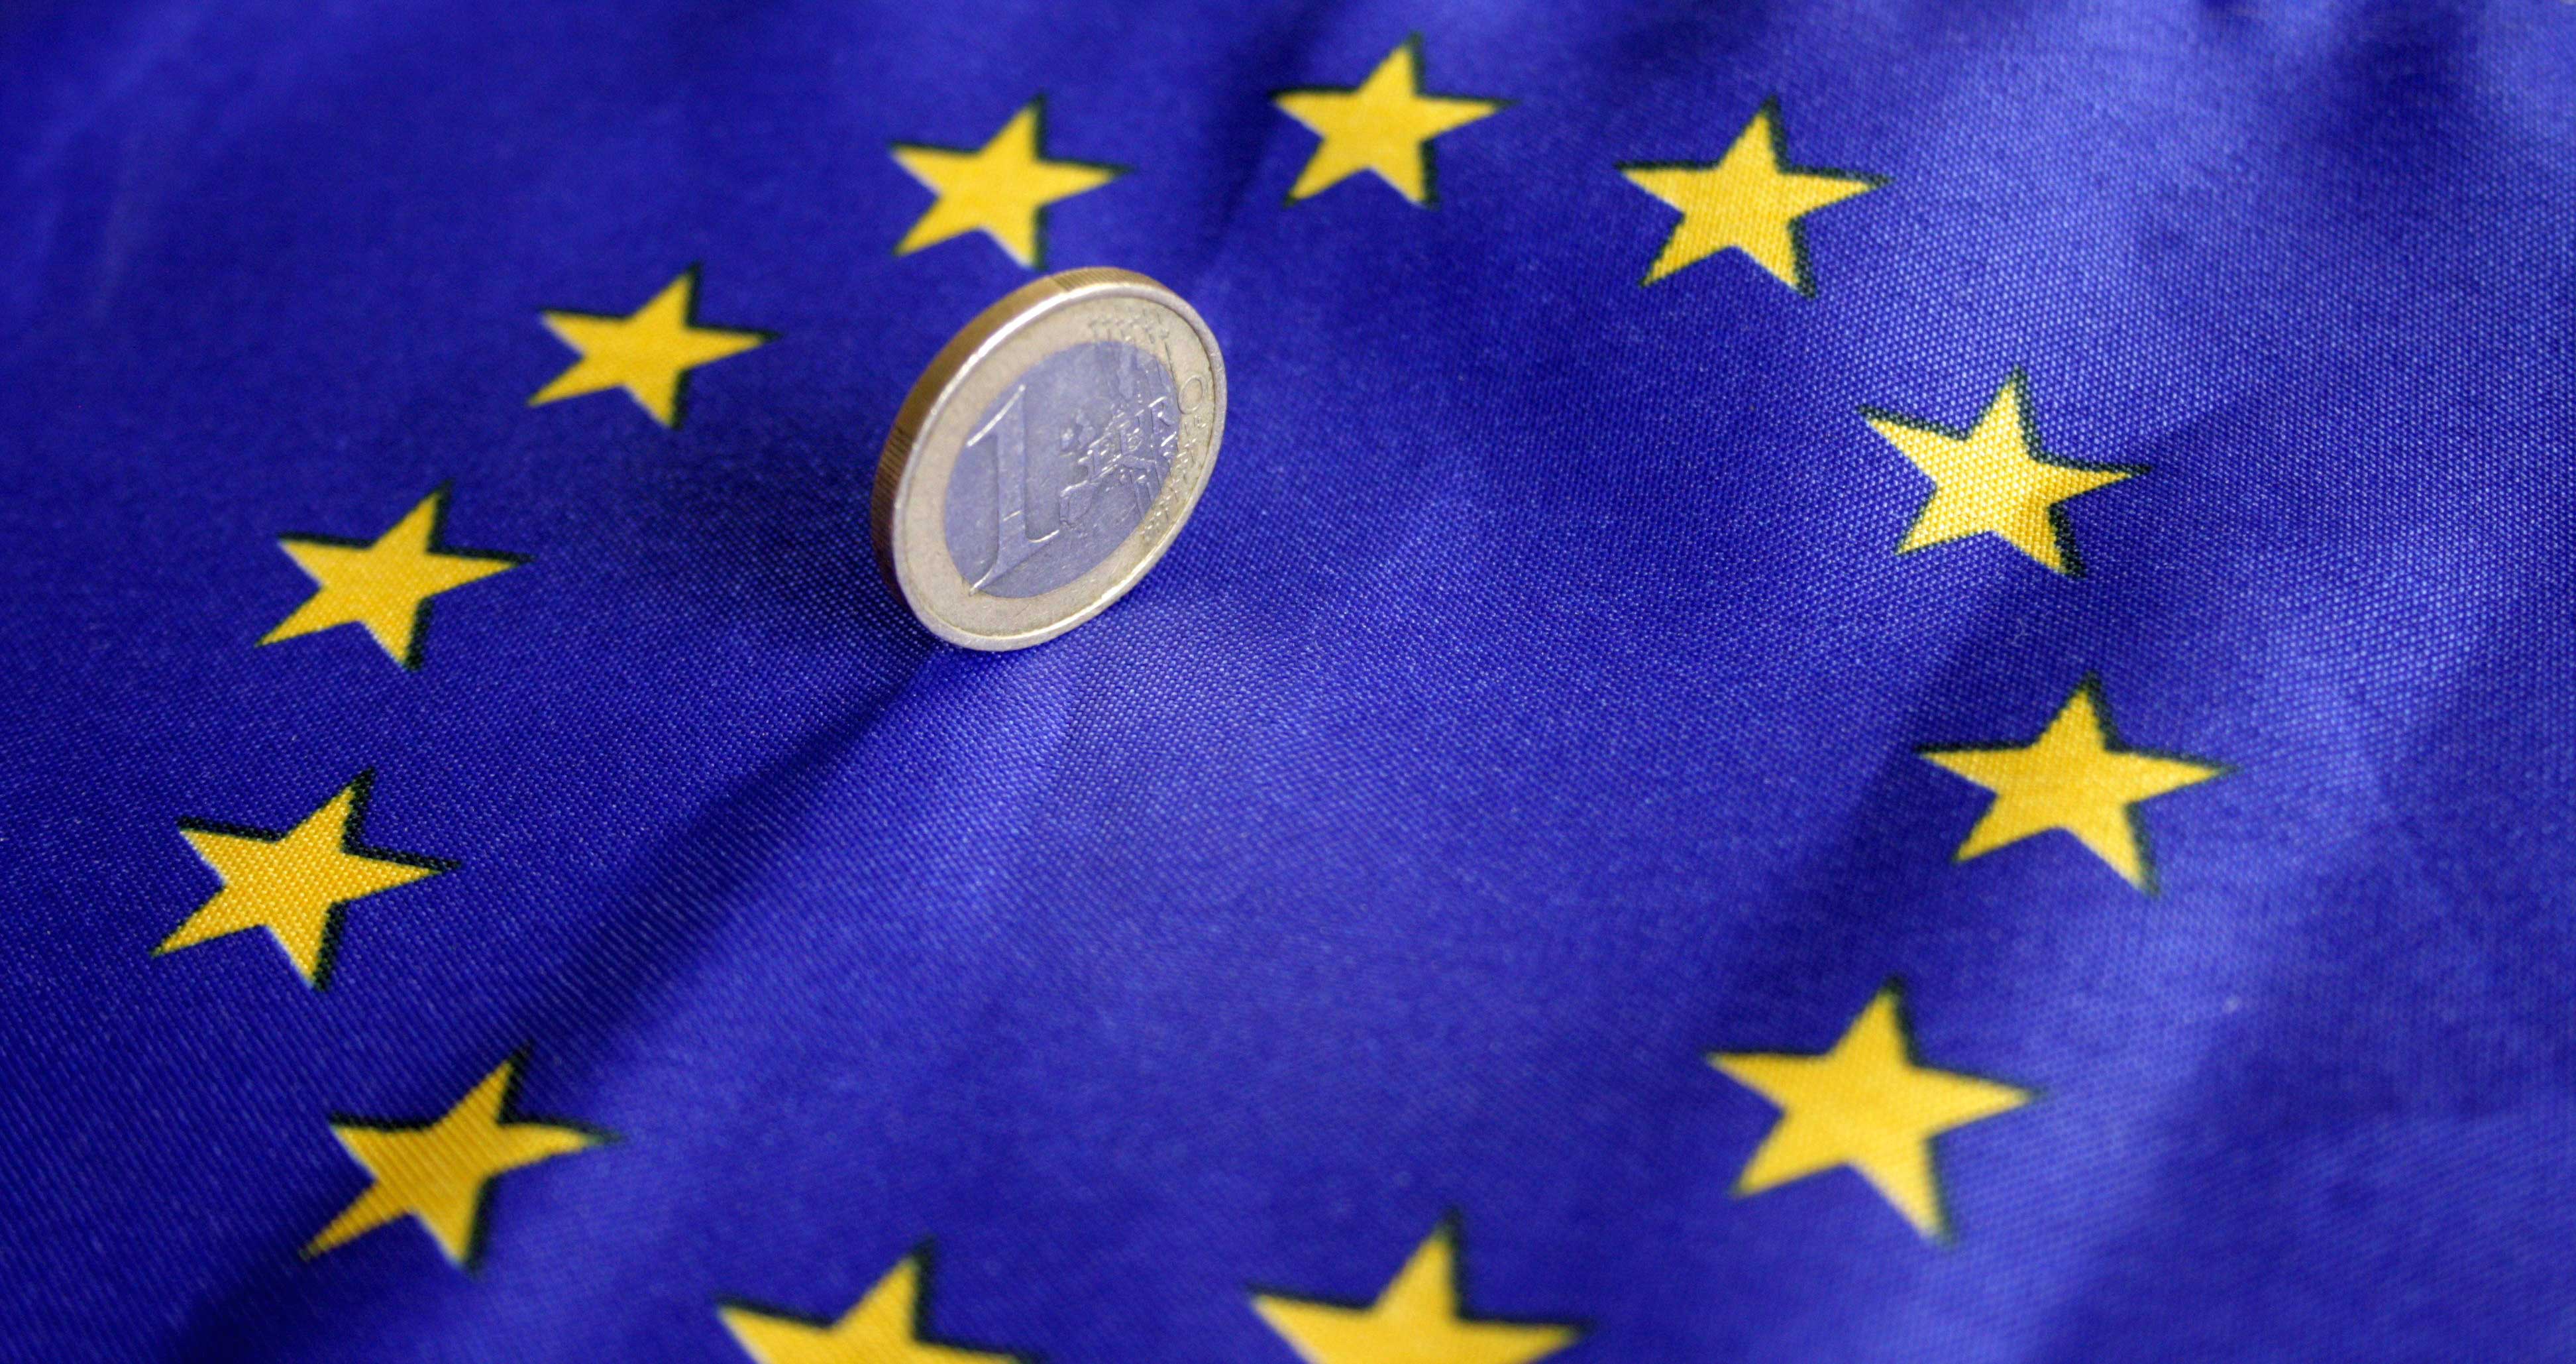 Symboldbild Eu-Flagge und Euro-Münze